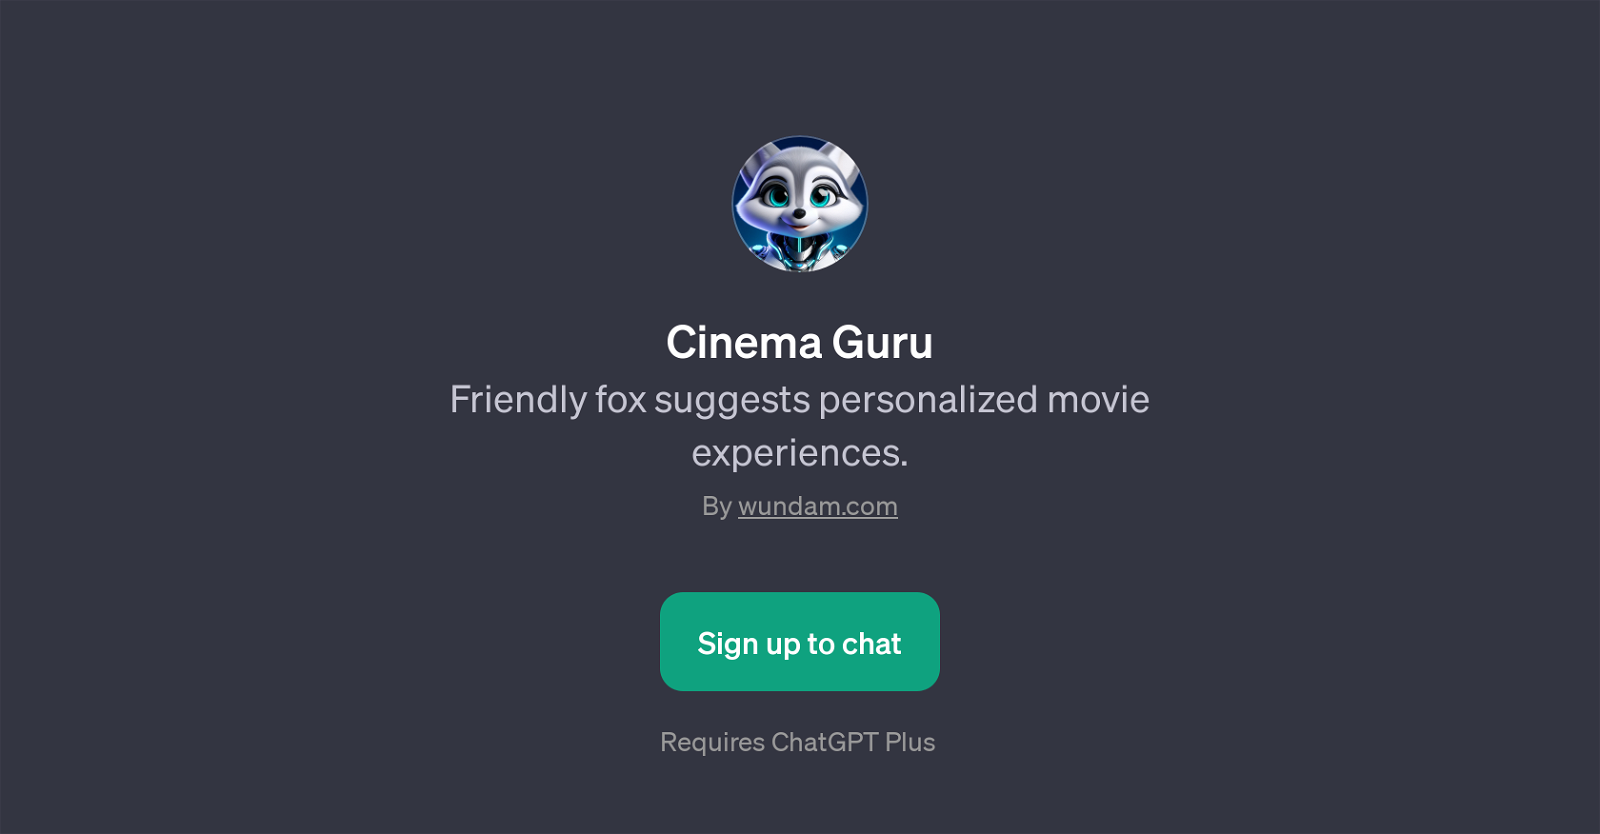 Cinema Guru website